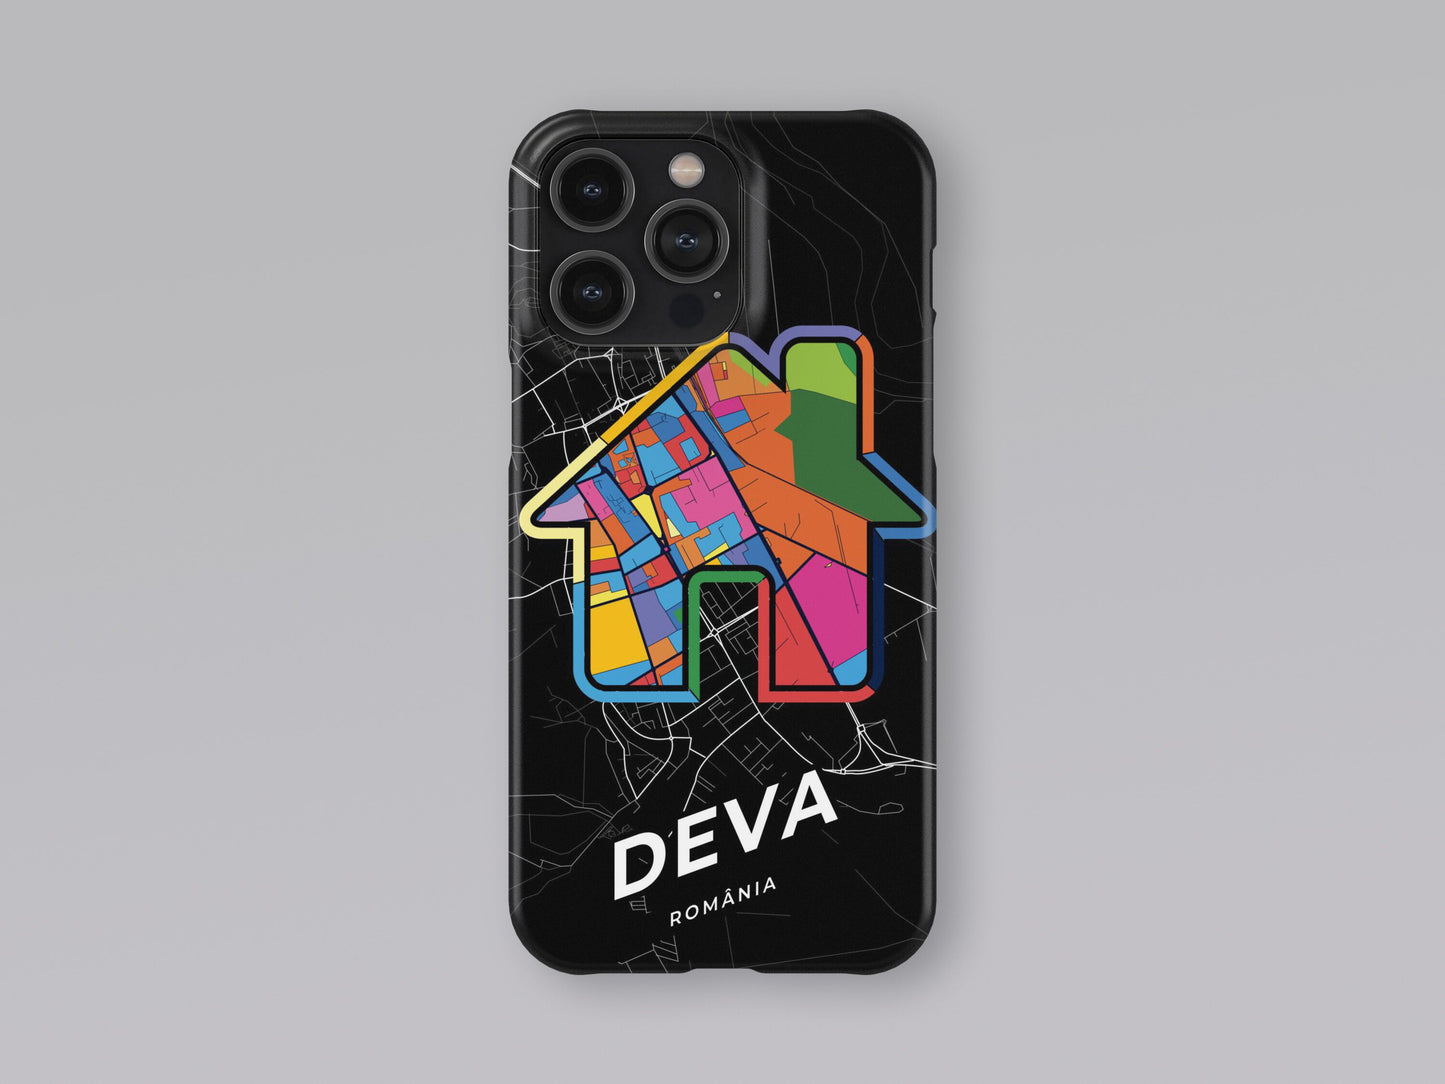 Deva Romania slim phone case with colorful icon. Birthday, wedding or housewarming gift. Couple match cases. 3